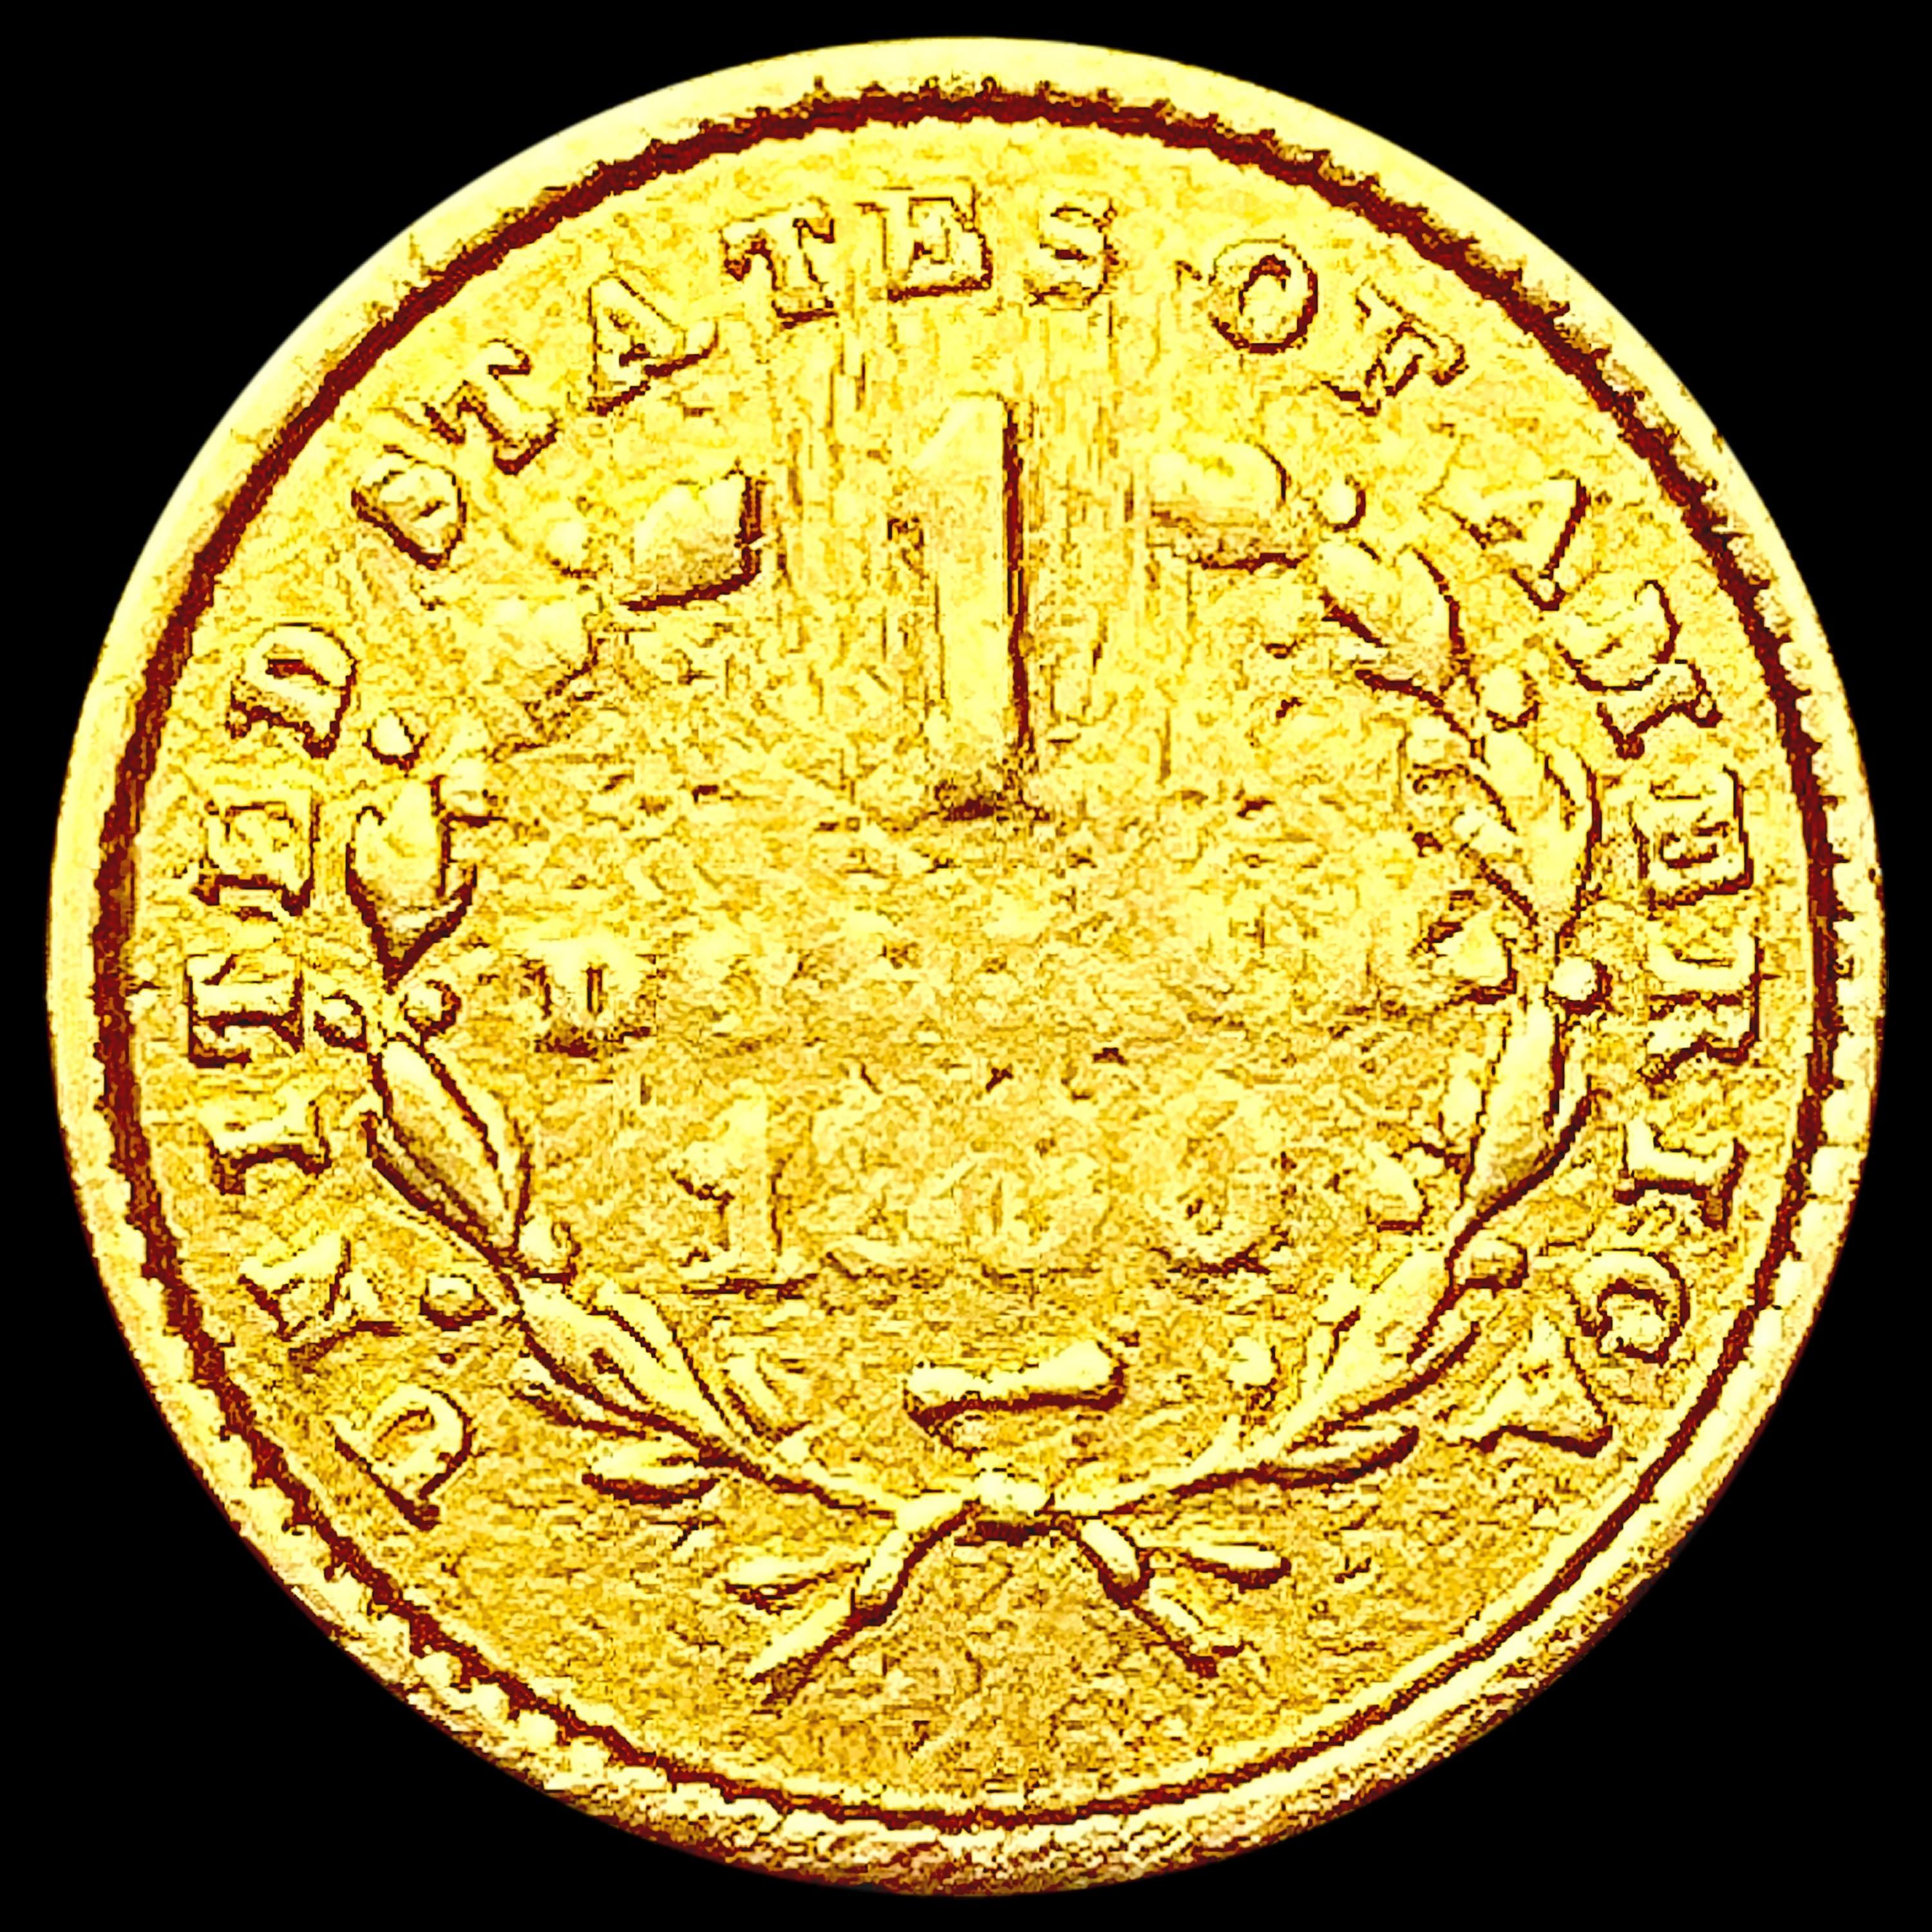 1850 Rare Gold Dollar NEARLY UNCIRCULATED